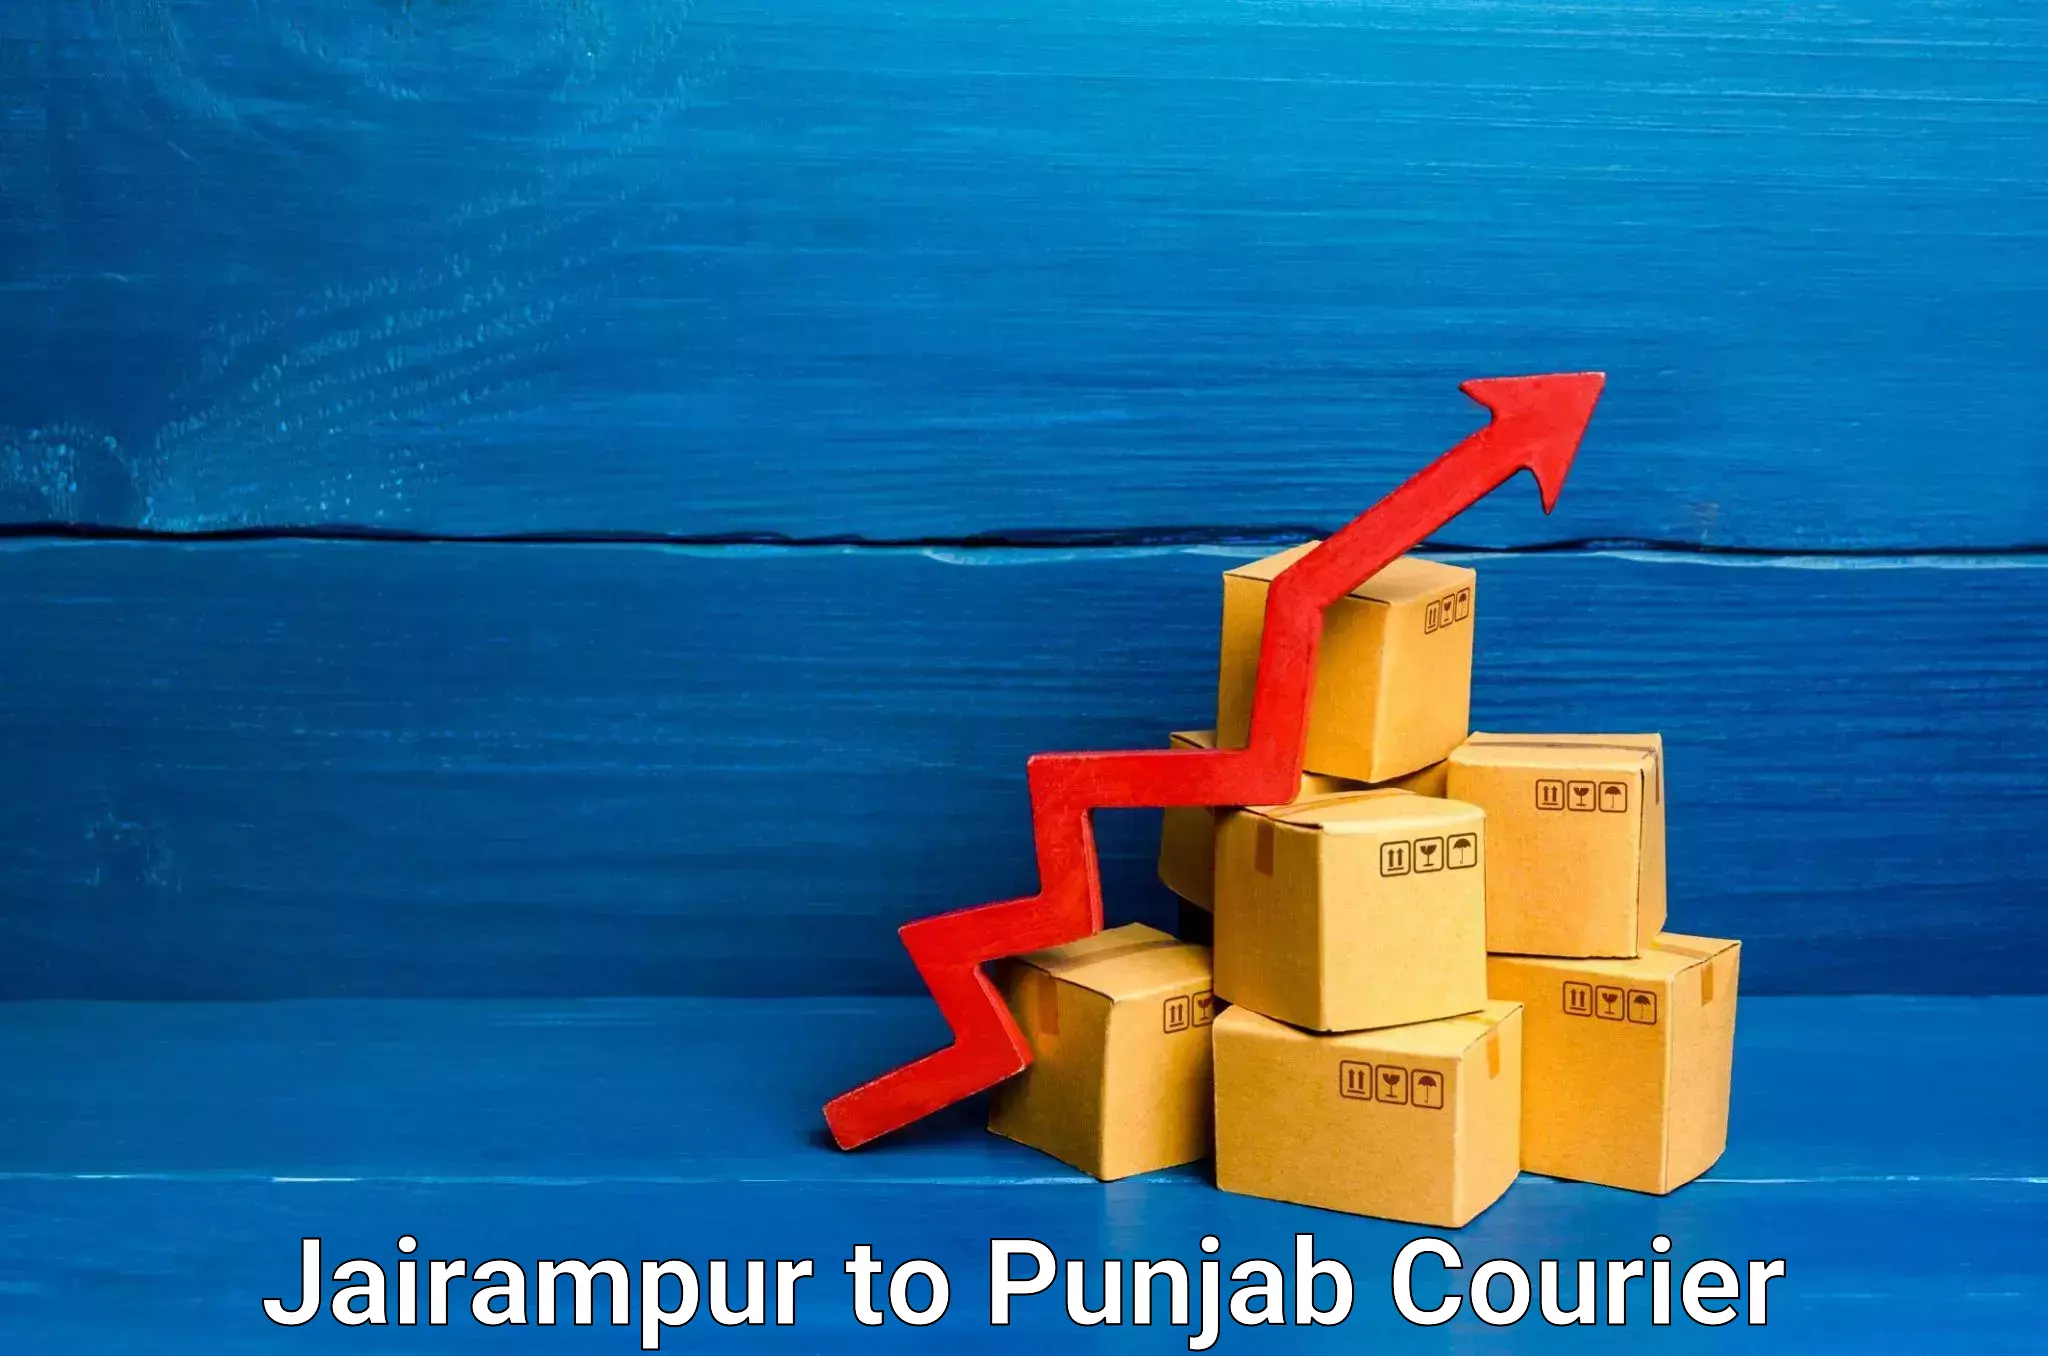 Speedy delivery service Jairampur to Punjab